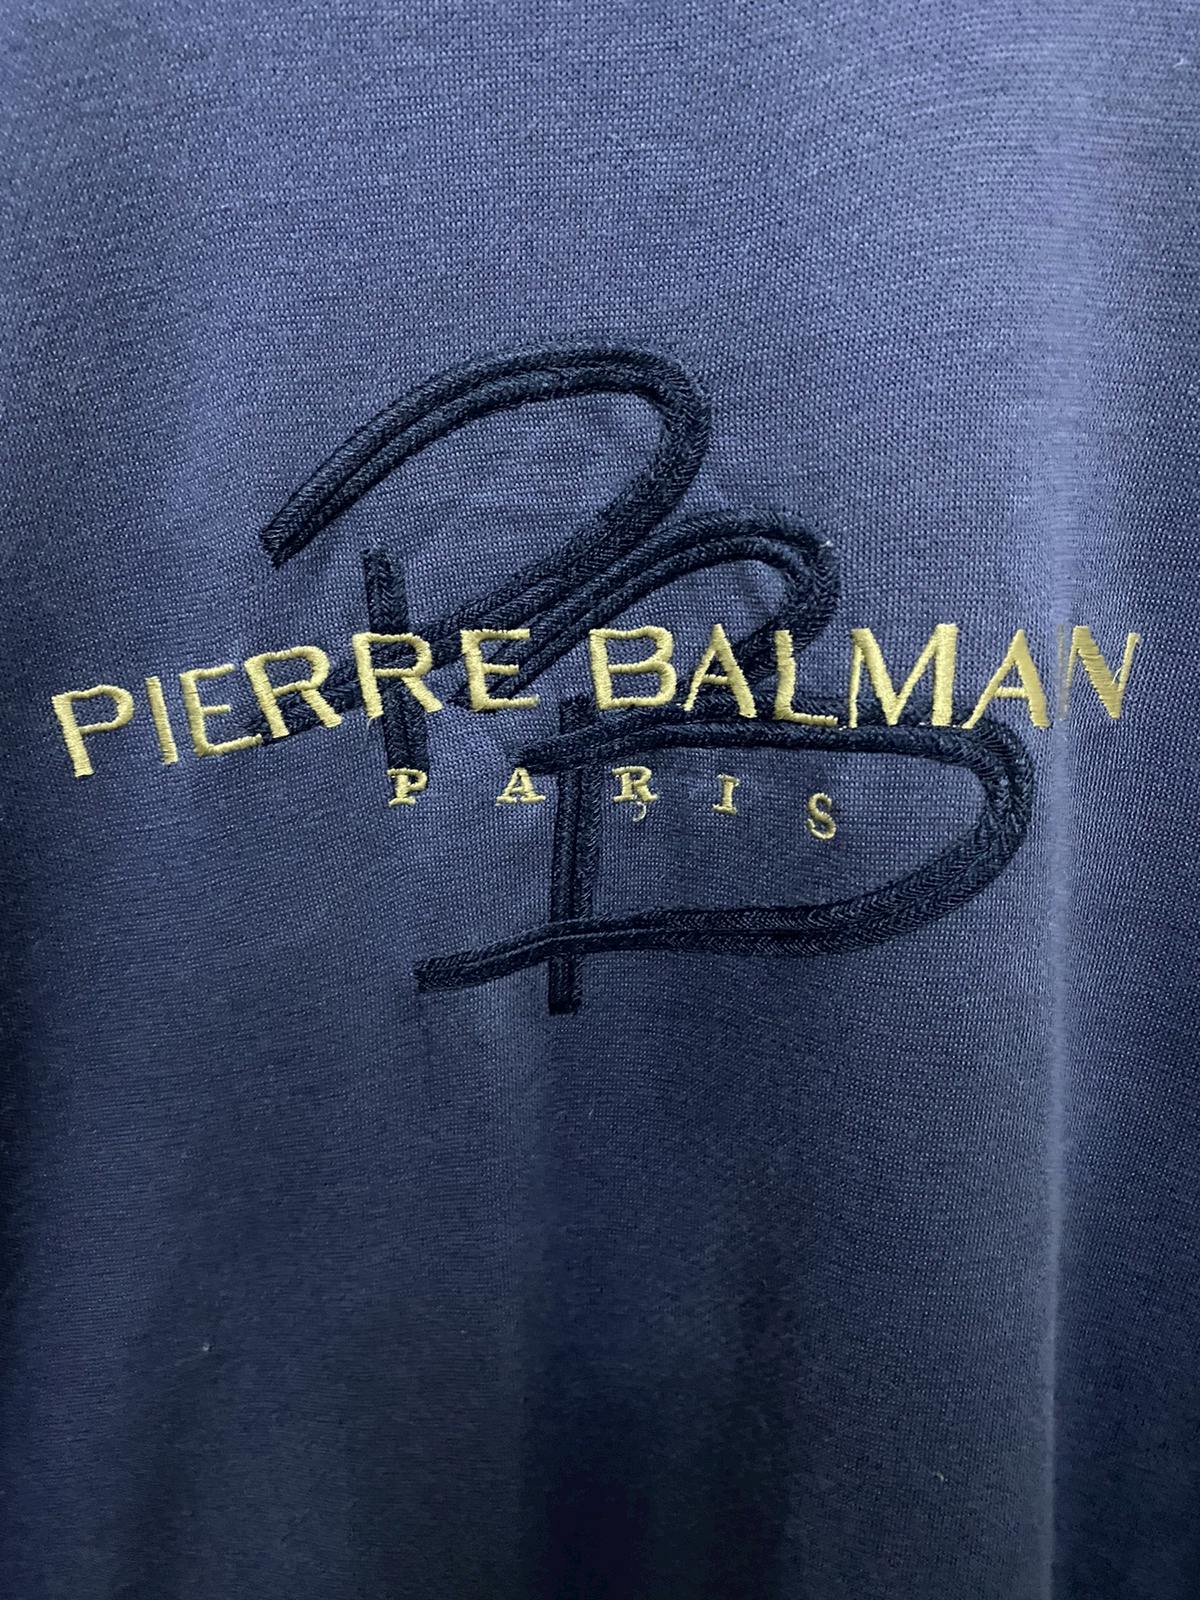 Vintage Pierre Balmain Sweatshirt - 3